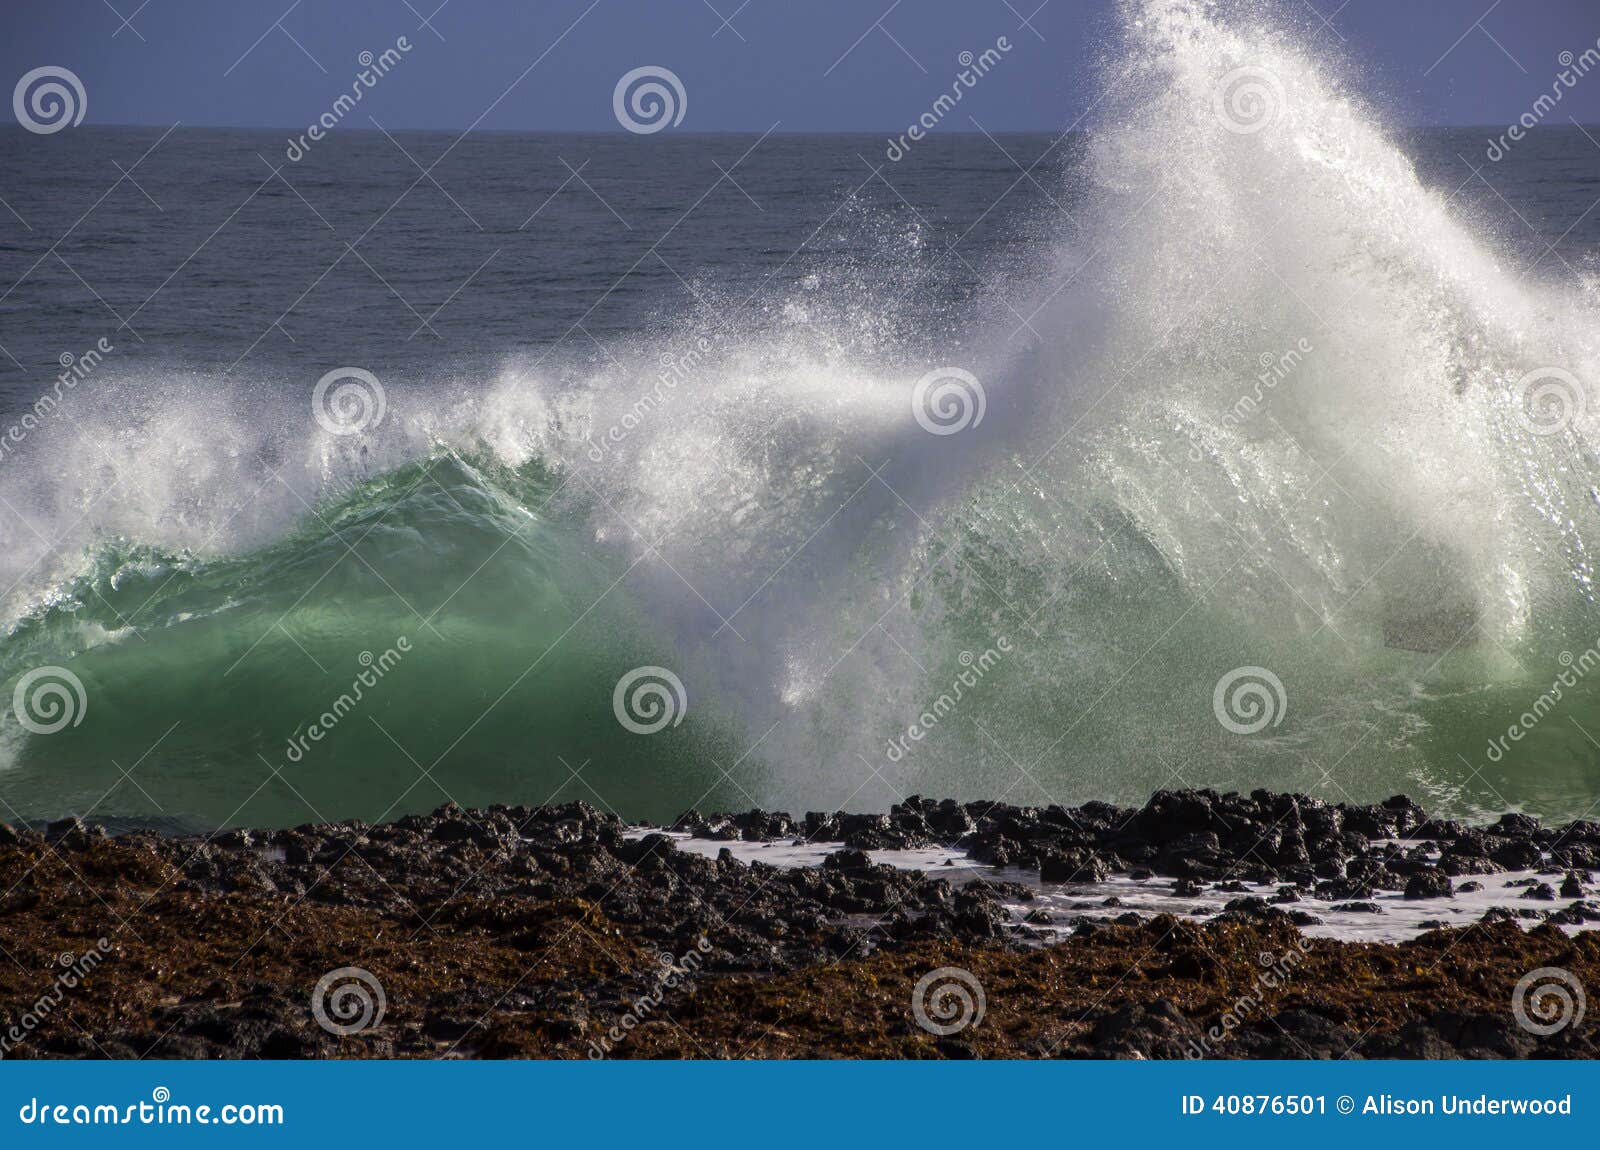 waves splashing on basalt rocks at ocean beach bunbury western australia